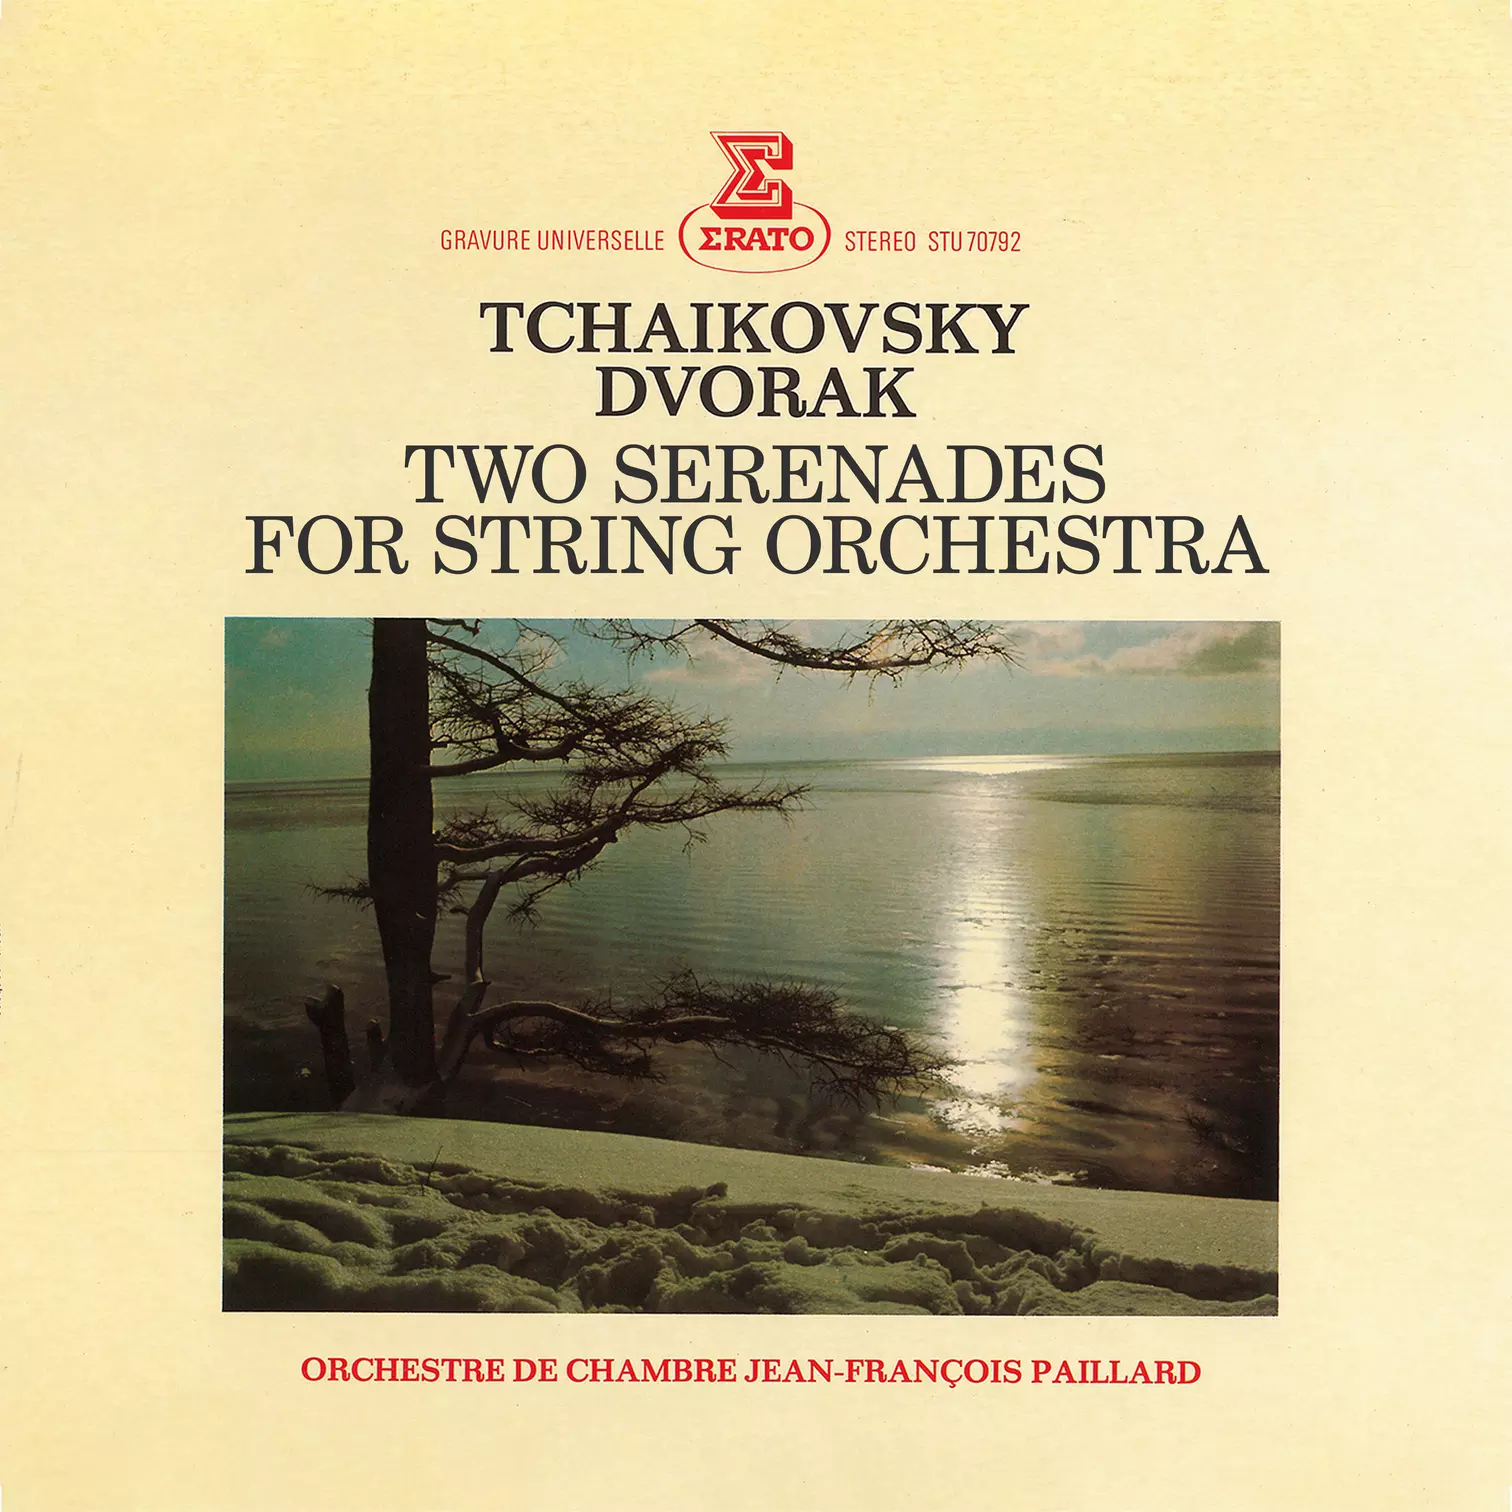 Dvořák & Tchaikovsky: Serenades for String Orchestra